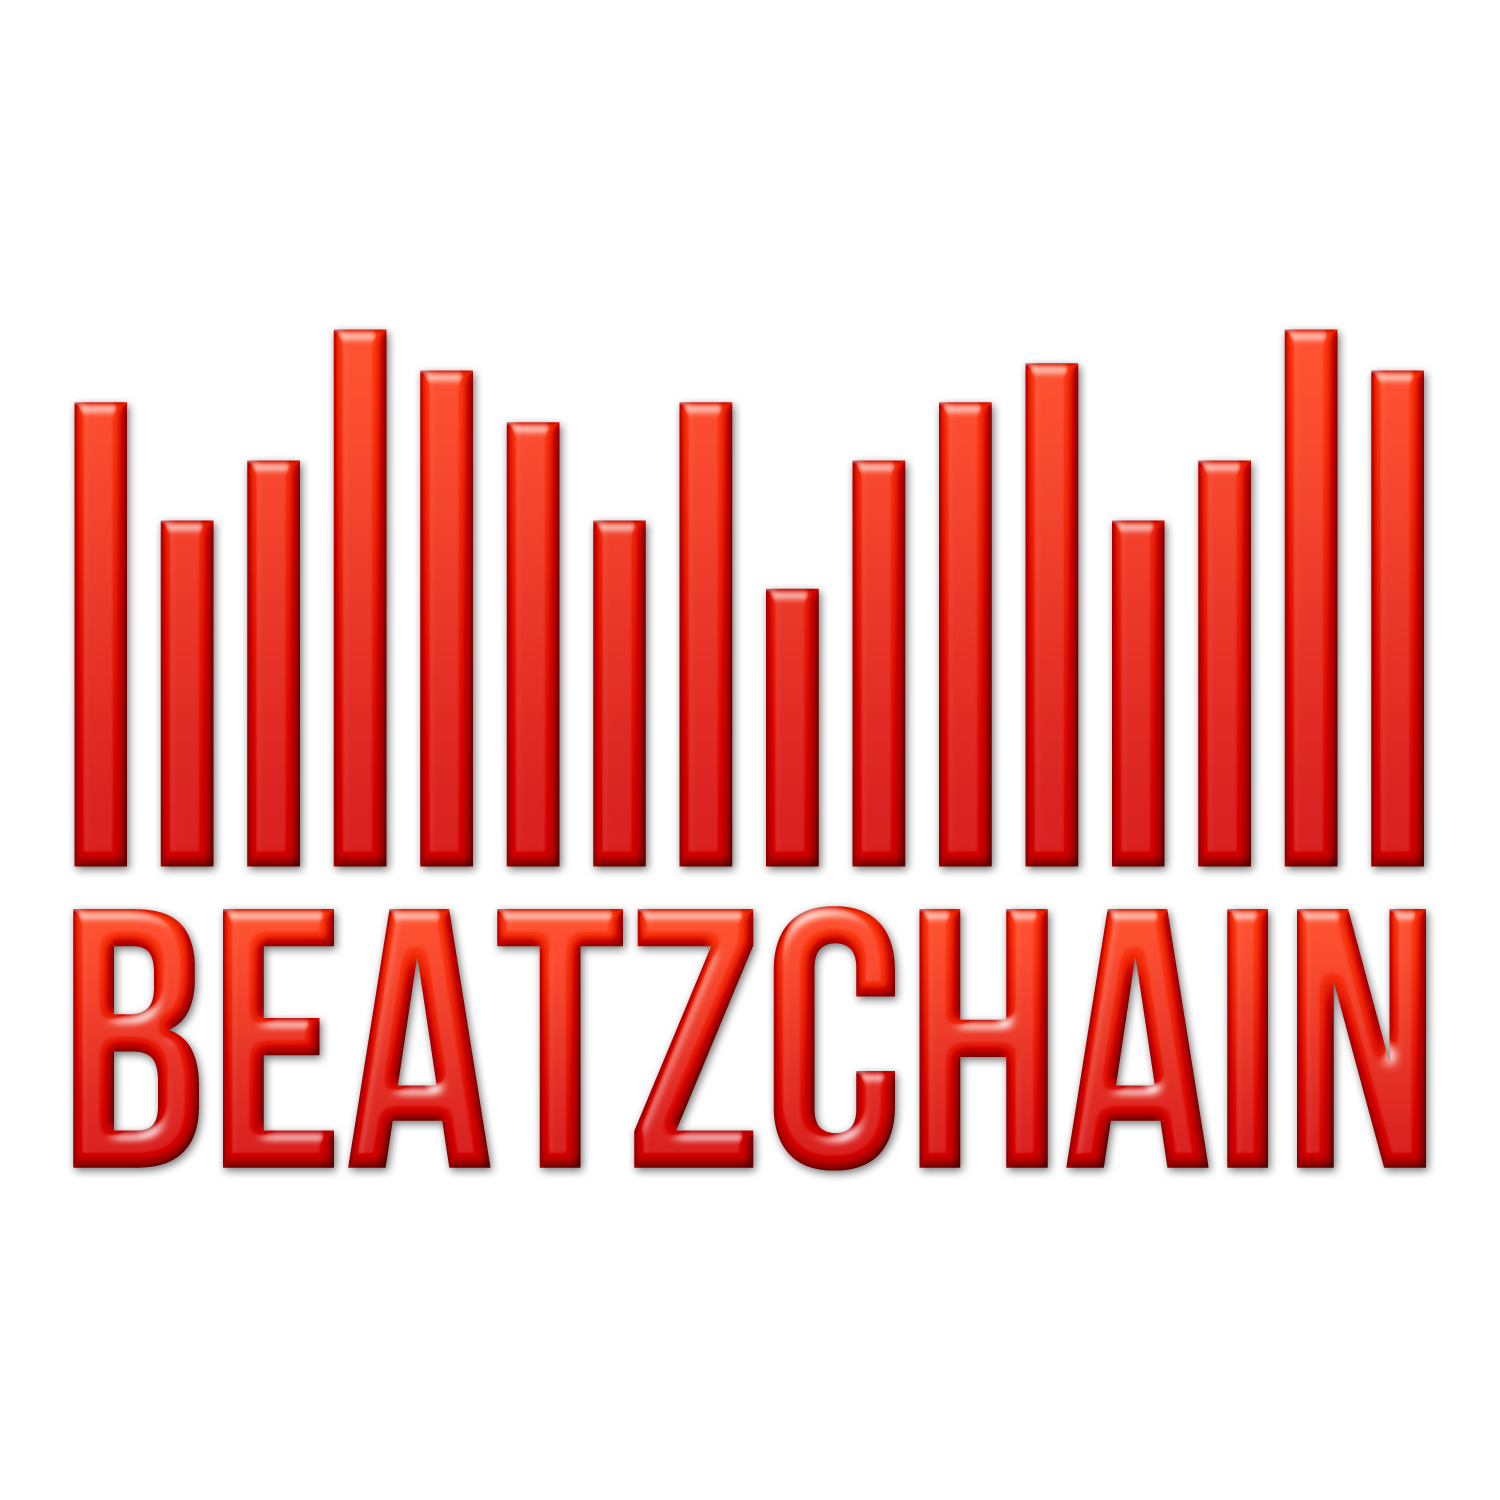 3 Beatzchain image.png